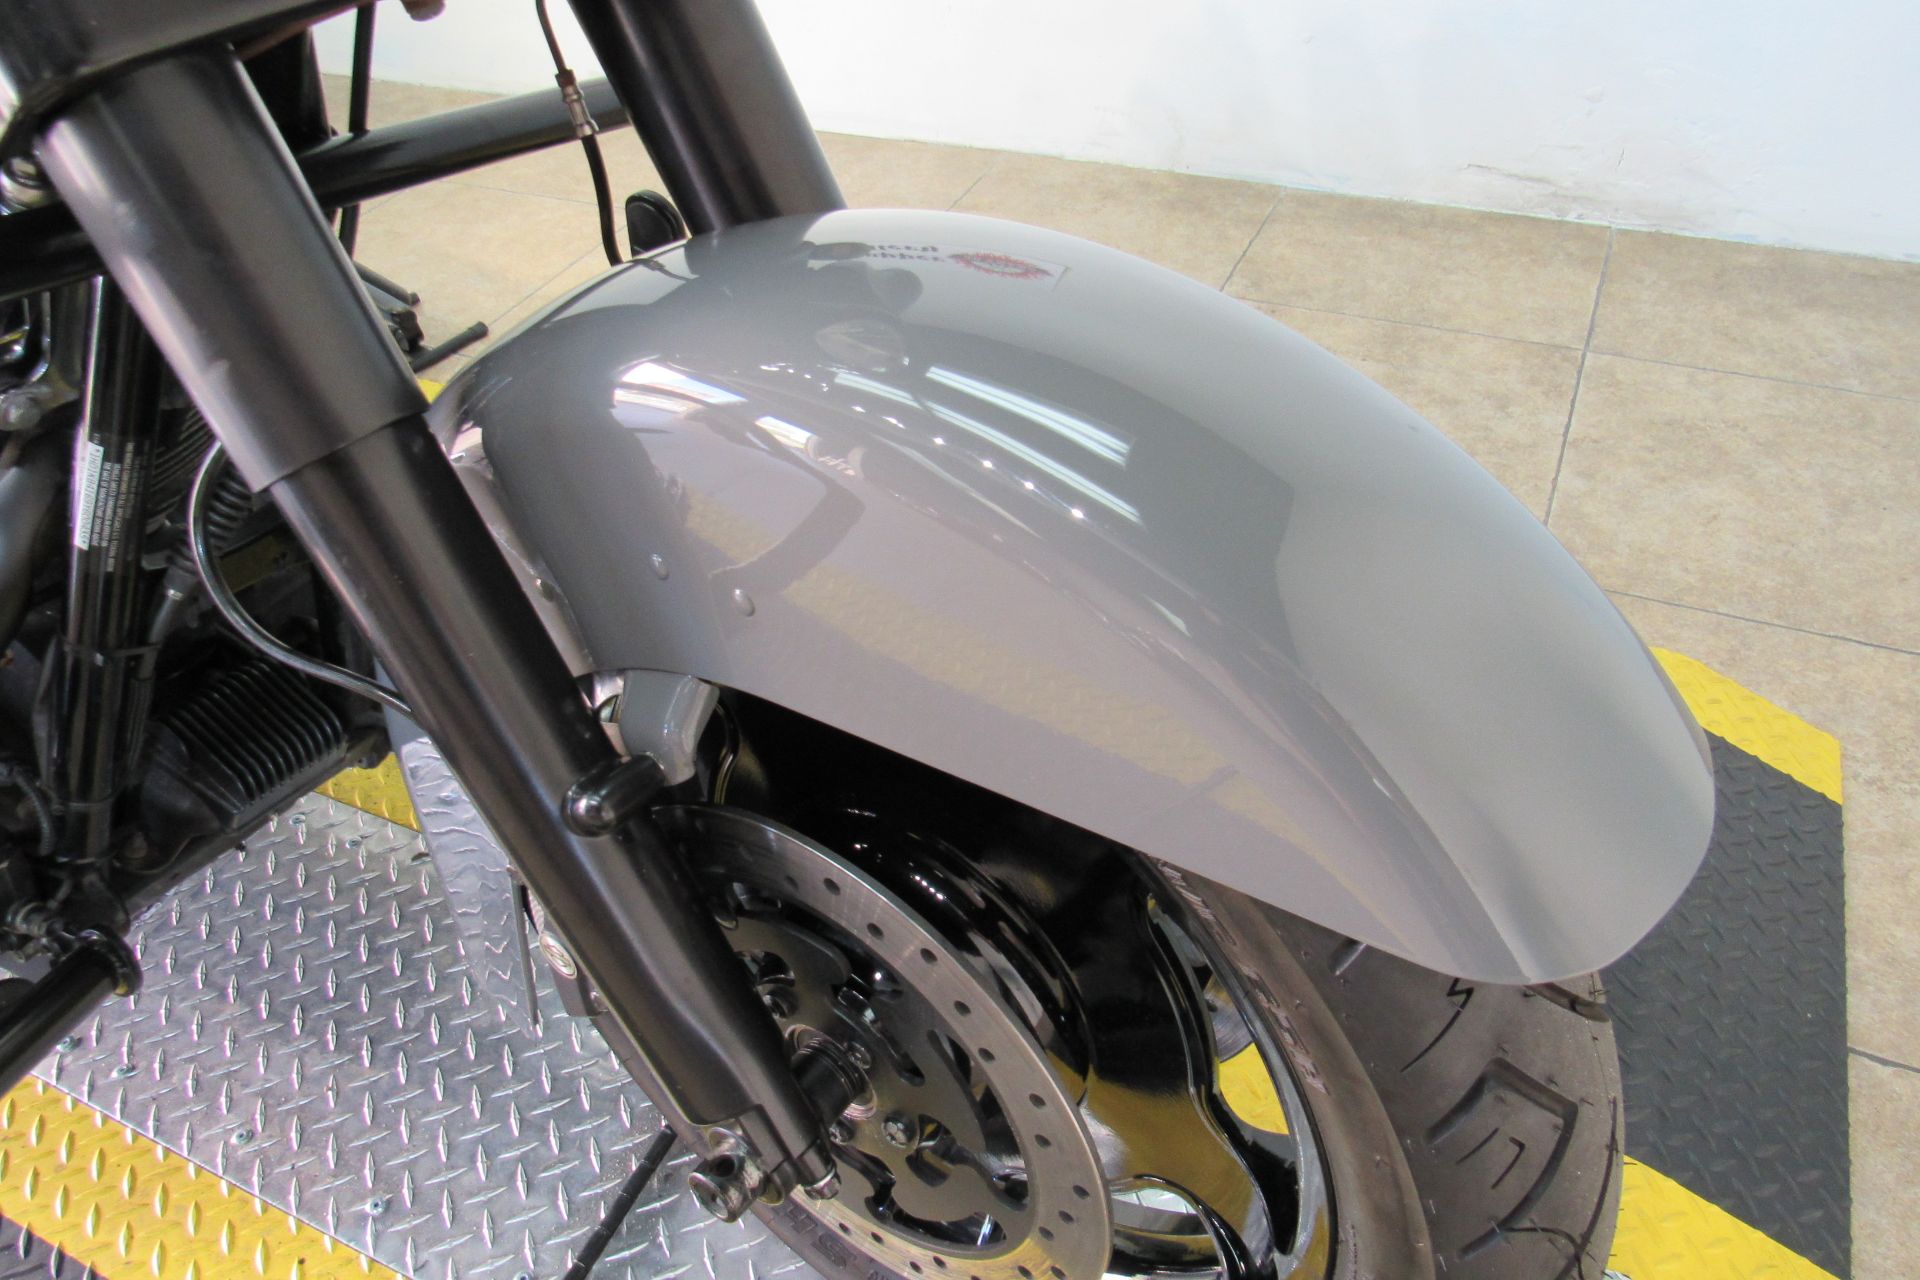 2009 Harley-Davidson Street Glide® in Temecula, California - Photo 21